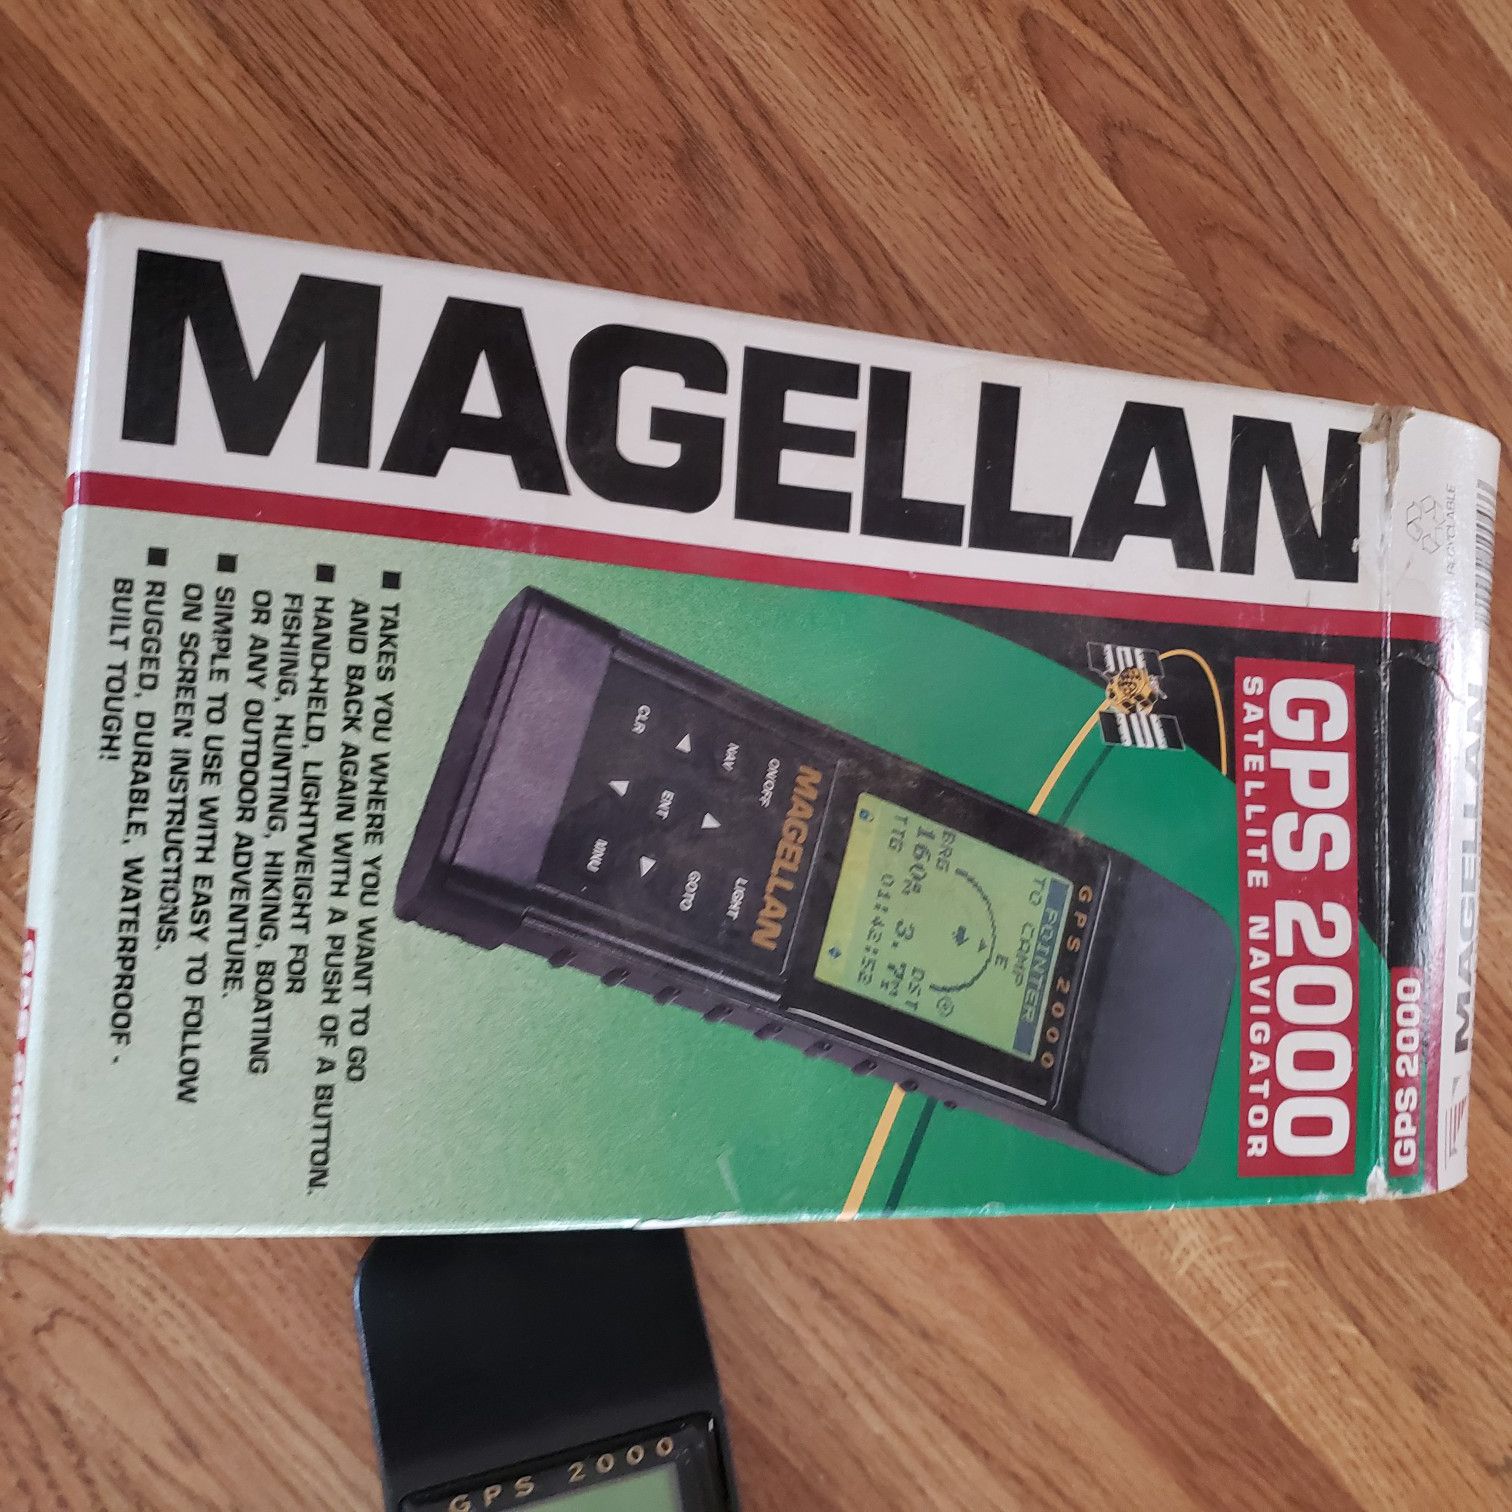 Magellan gps 2000. New